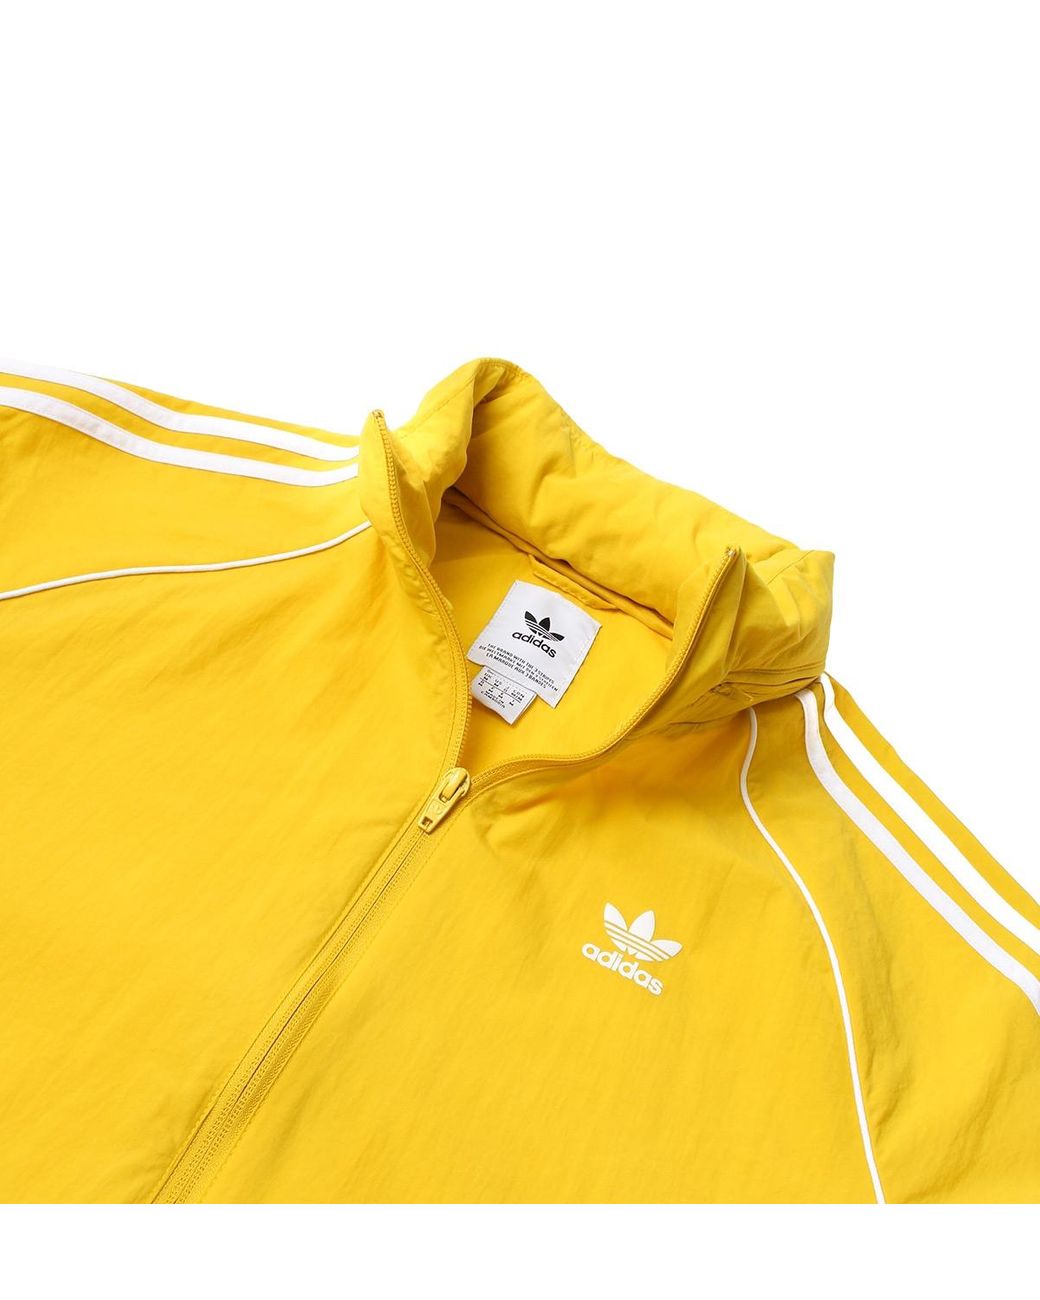 adidas Originals Synthetic Yellow Sst Windbreaker Jacket for Men | Lyst